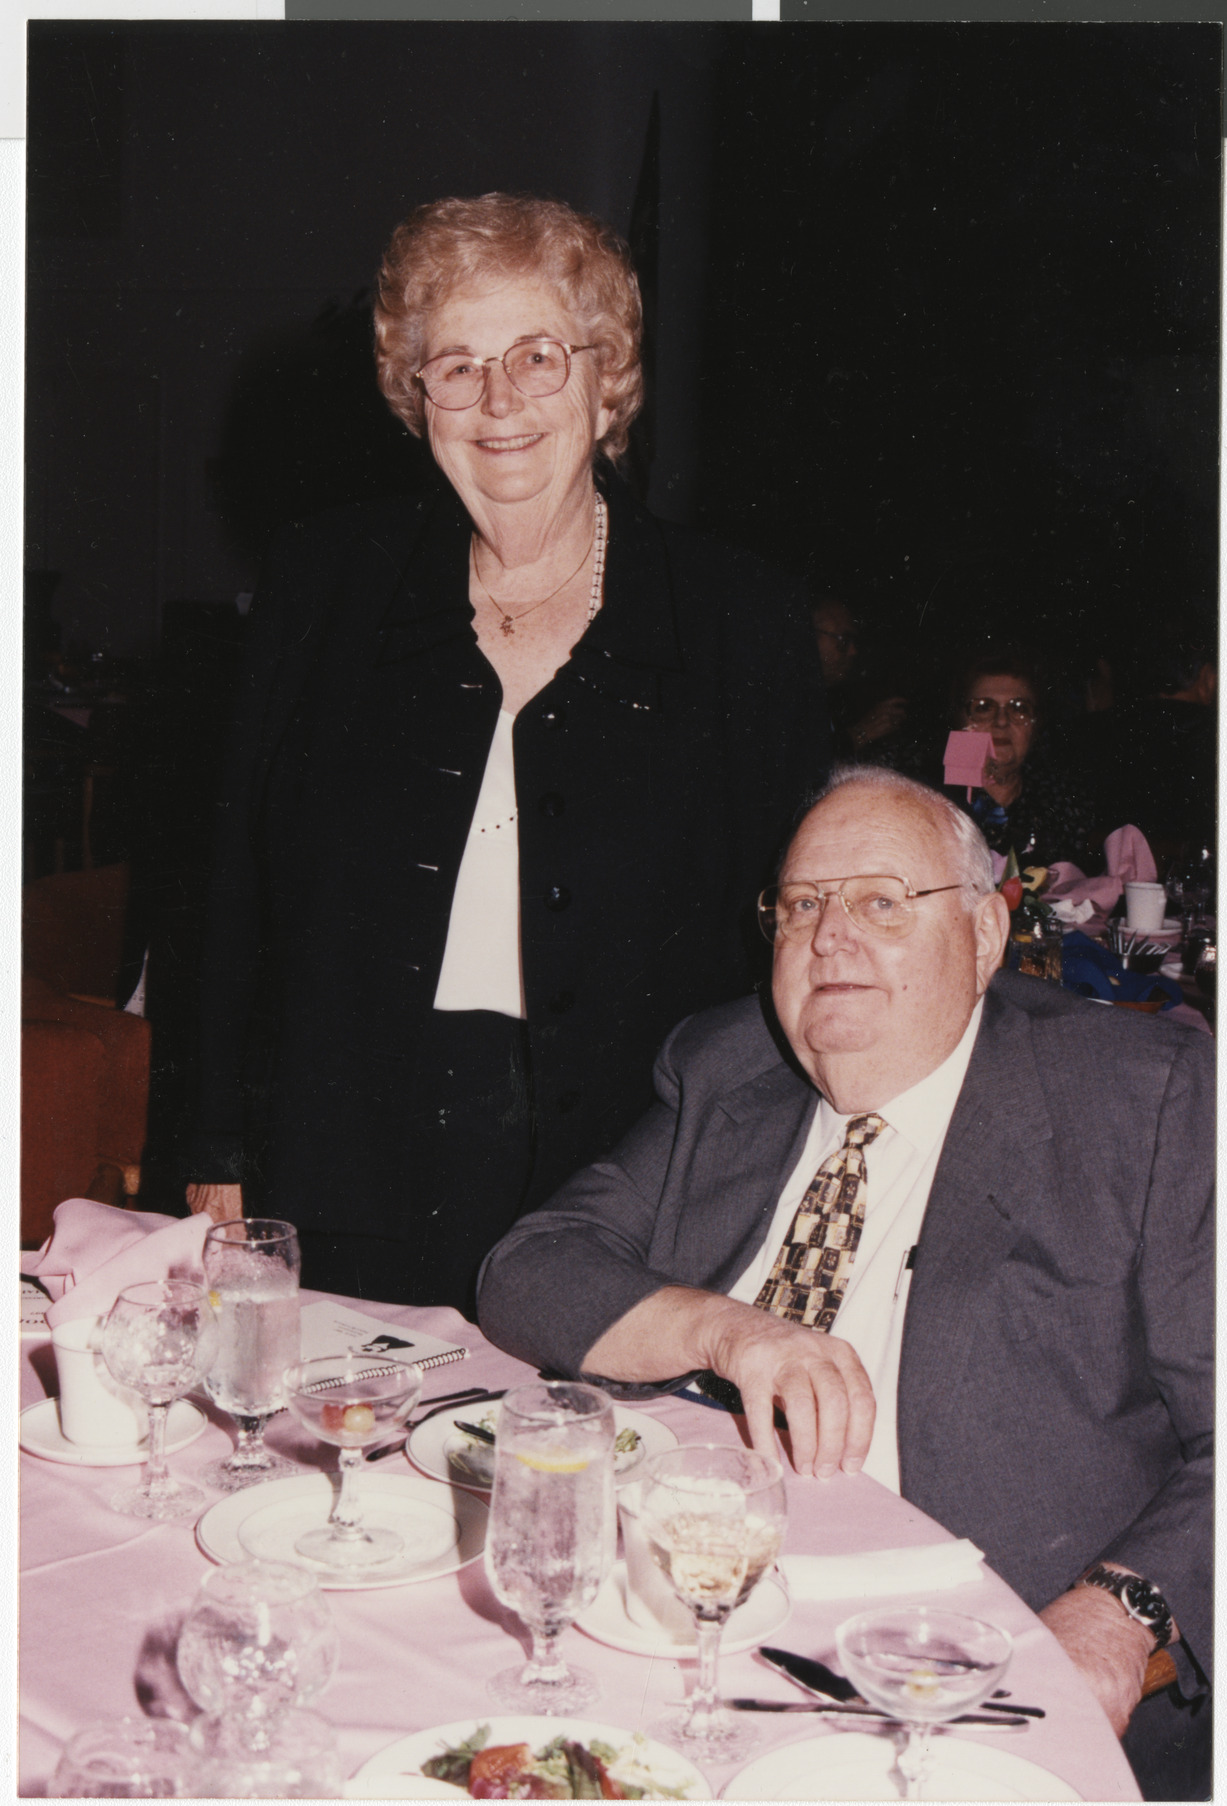 Photograph of Charles Salton and Adele Baratz, 1990s